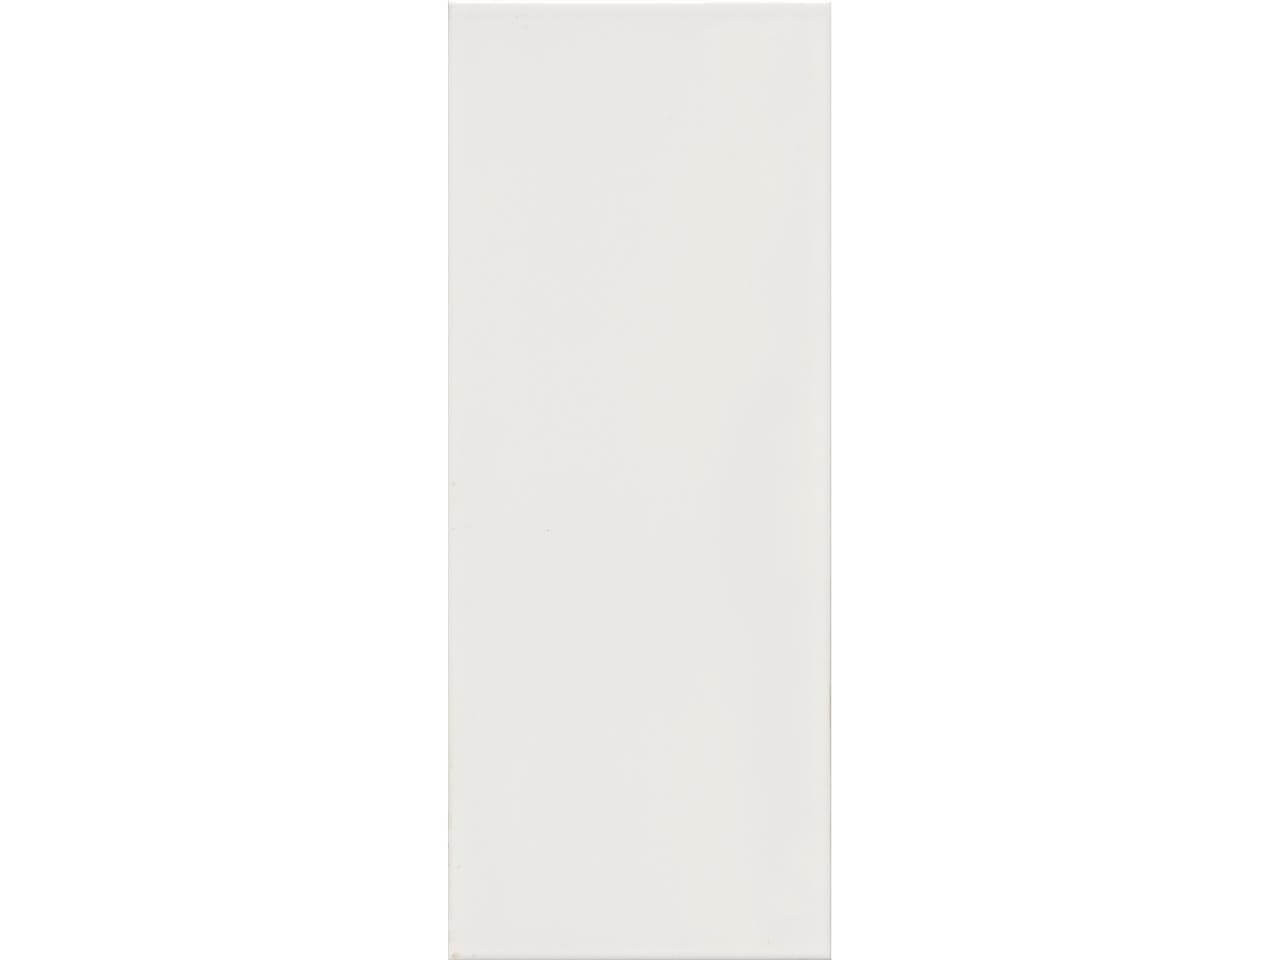 Photograph of 20x50cm Winter White gloss wall tile